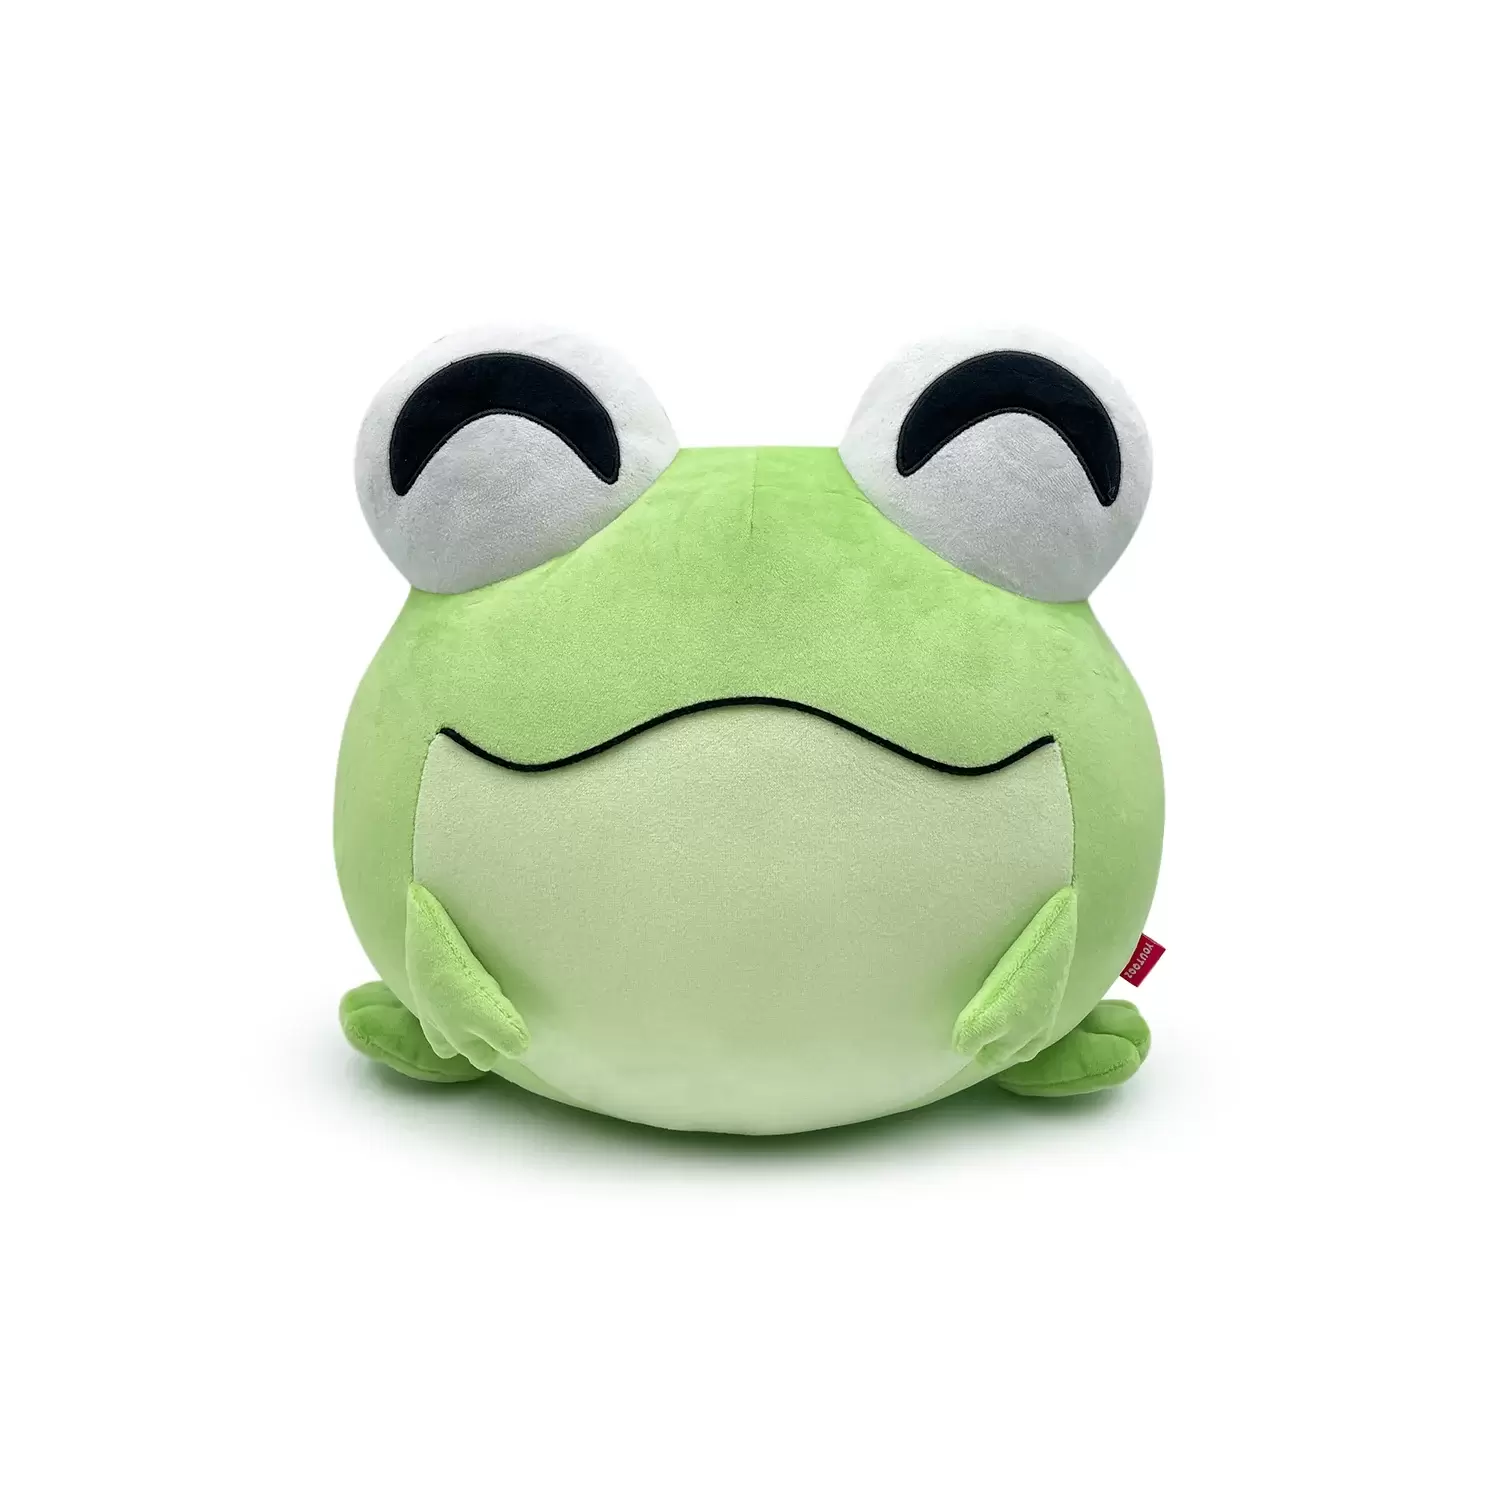 Blarg Frog Plush (1ft) - Youtooz action figure